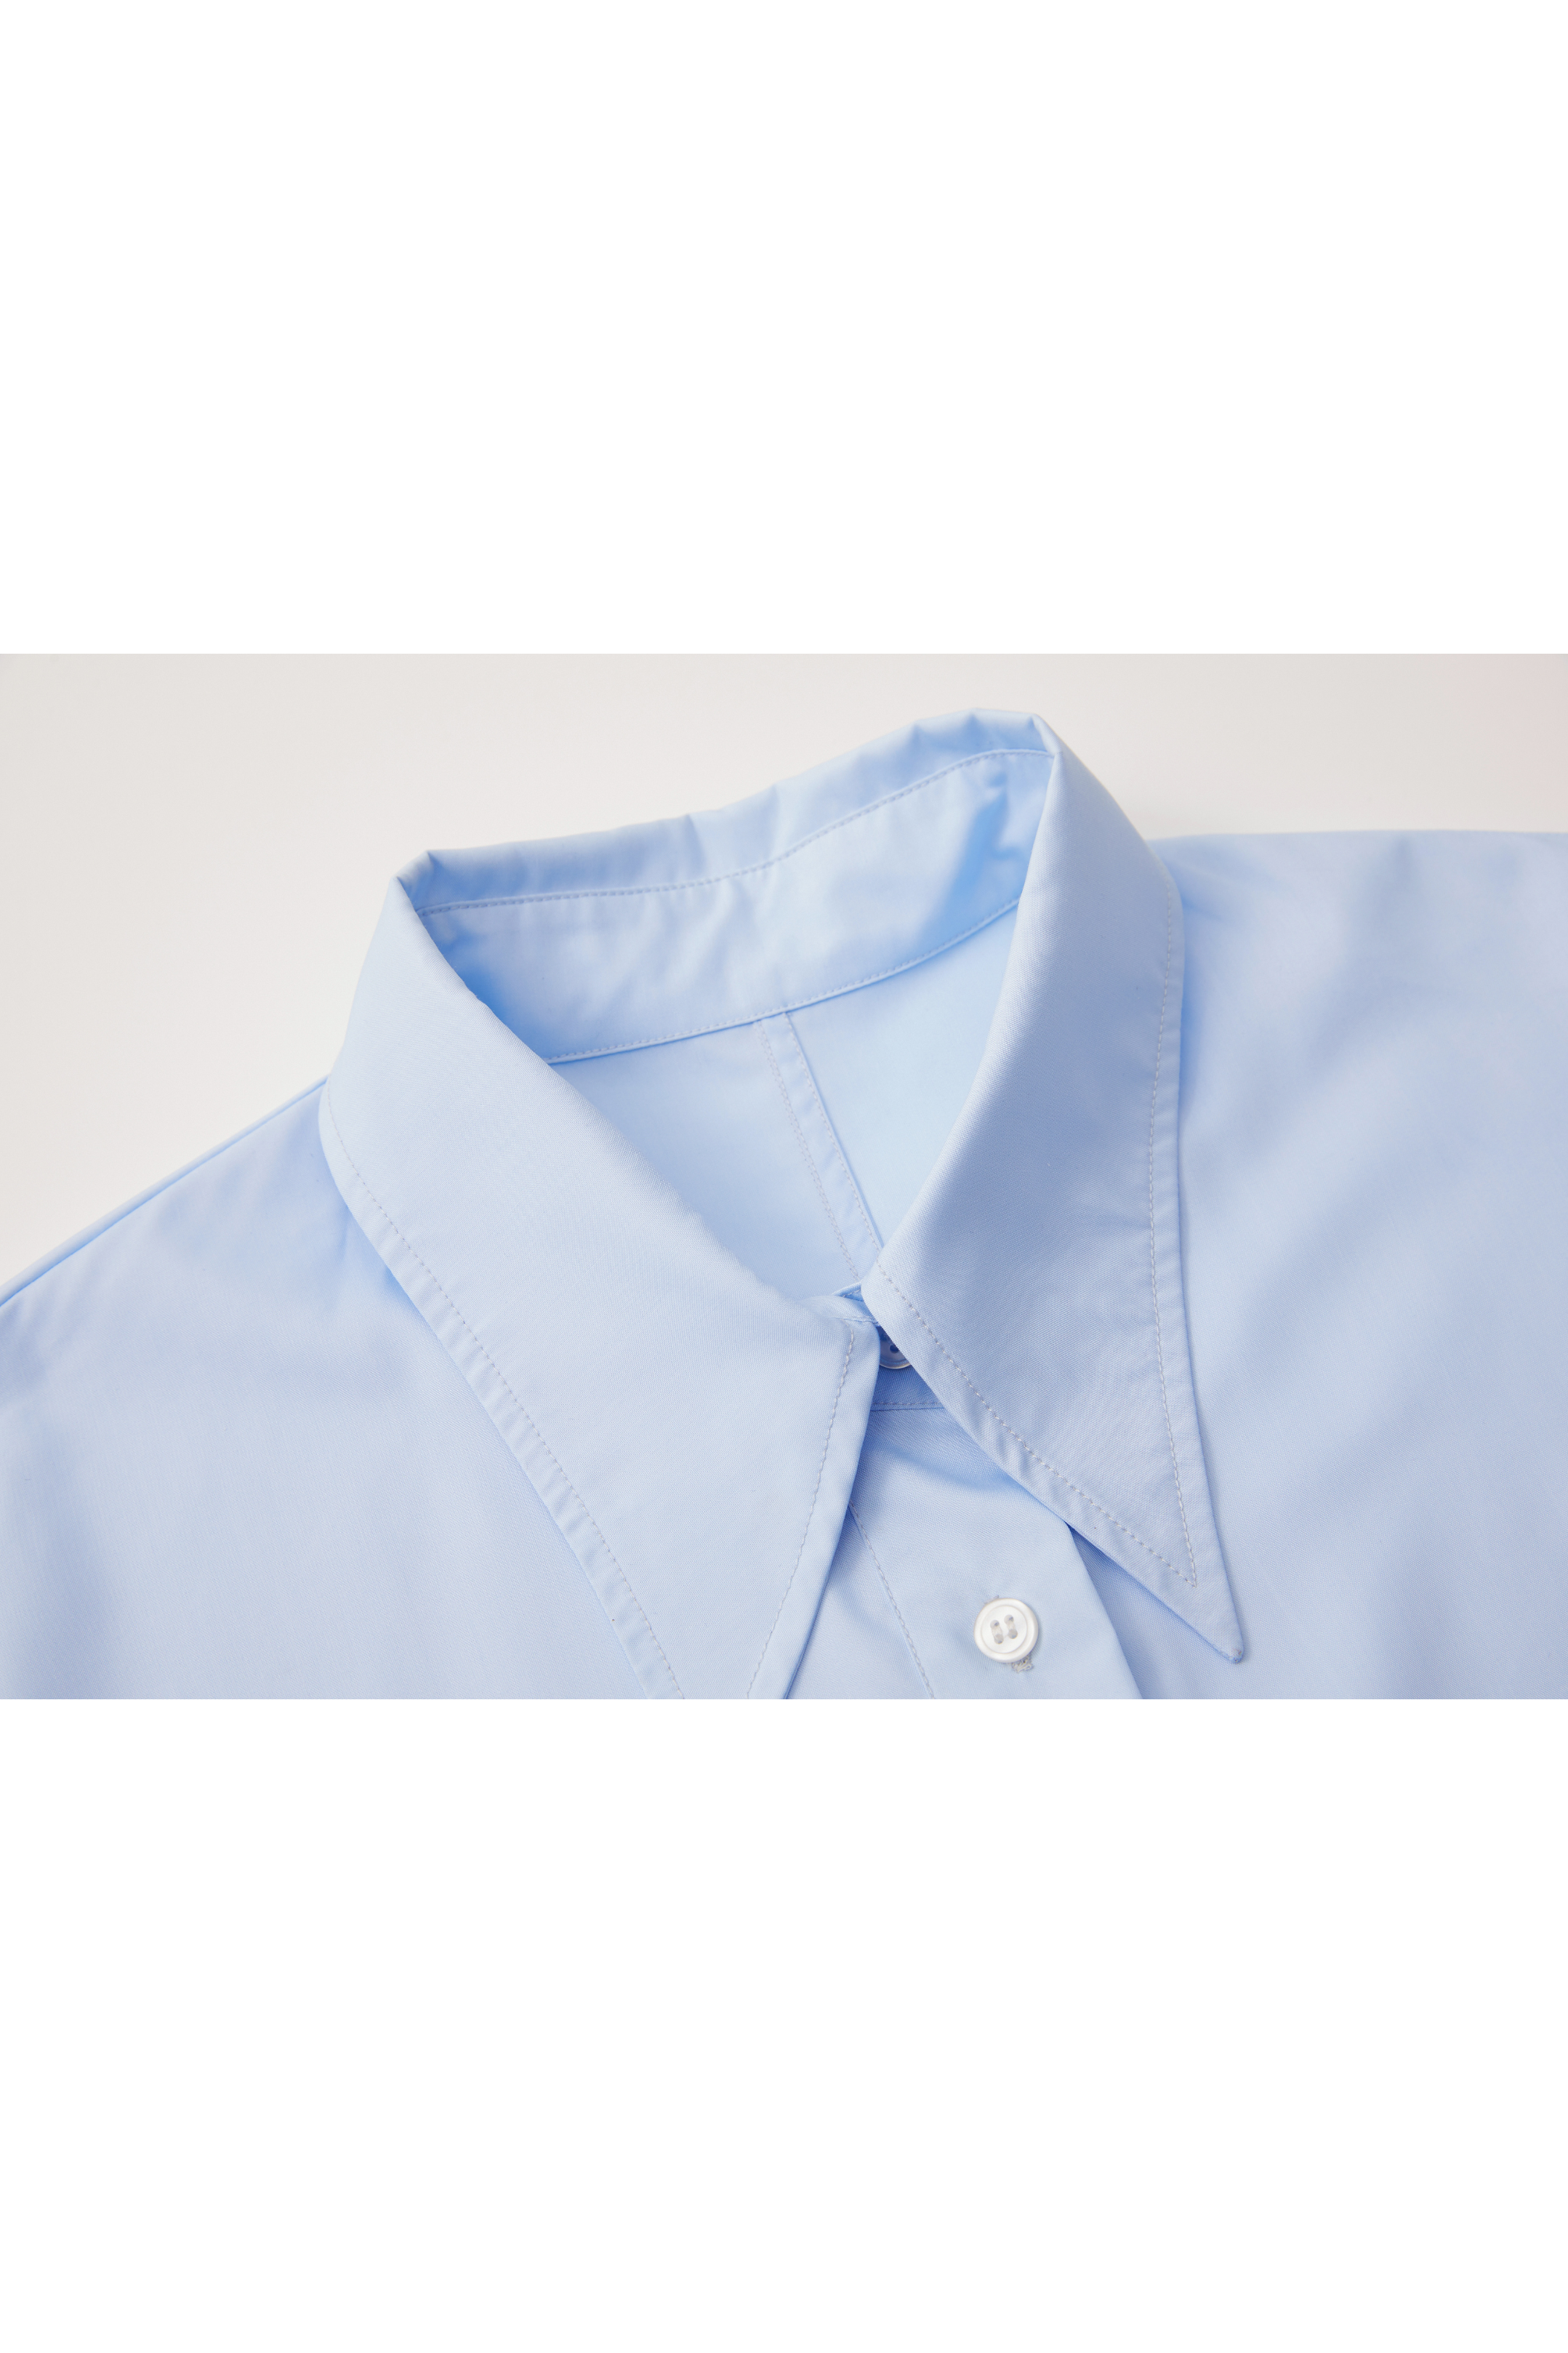 BASIC SMOOTH COLOR SHIRT / 베이직 스무스 컬러 셔츠